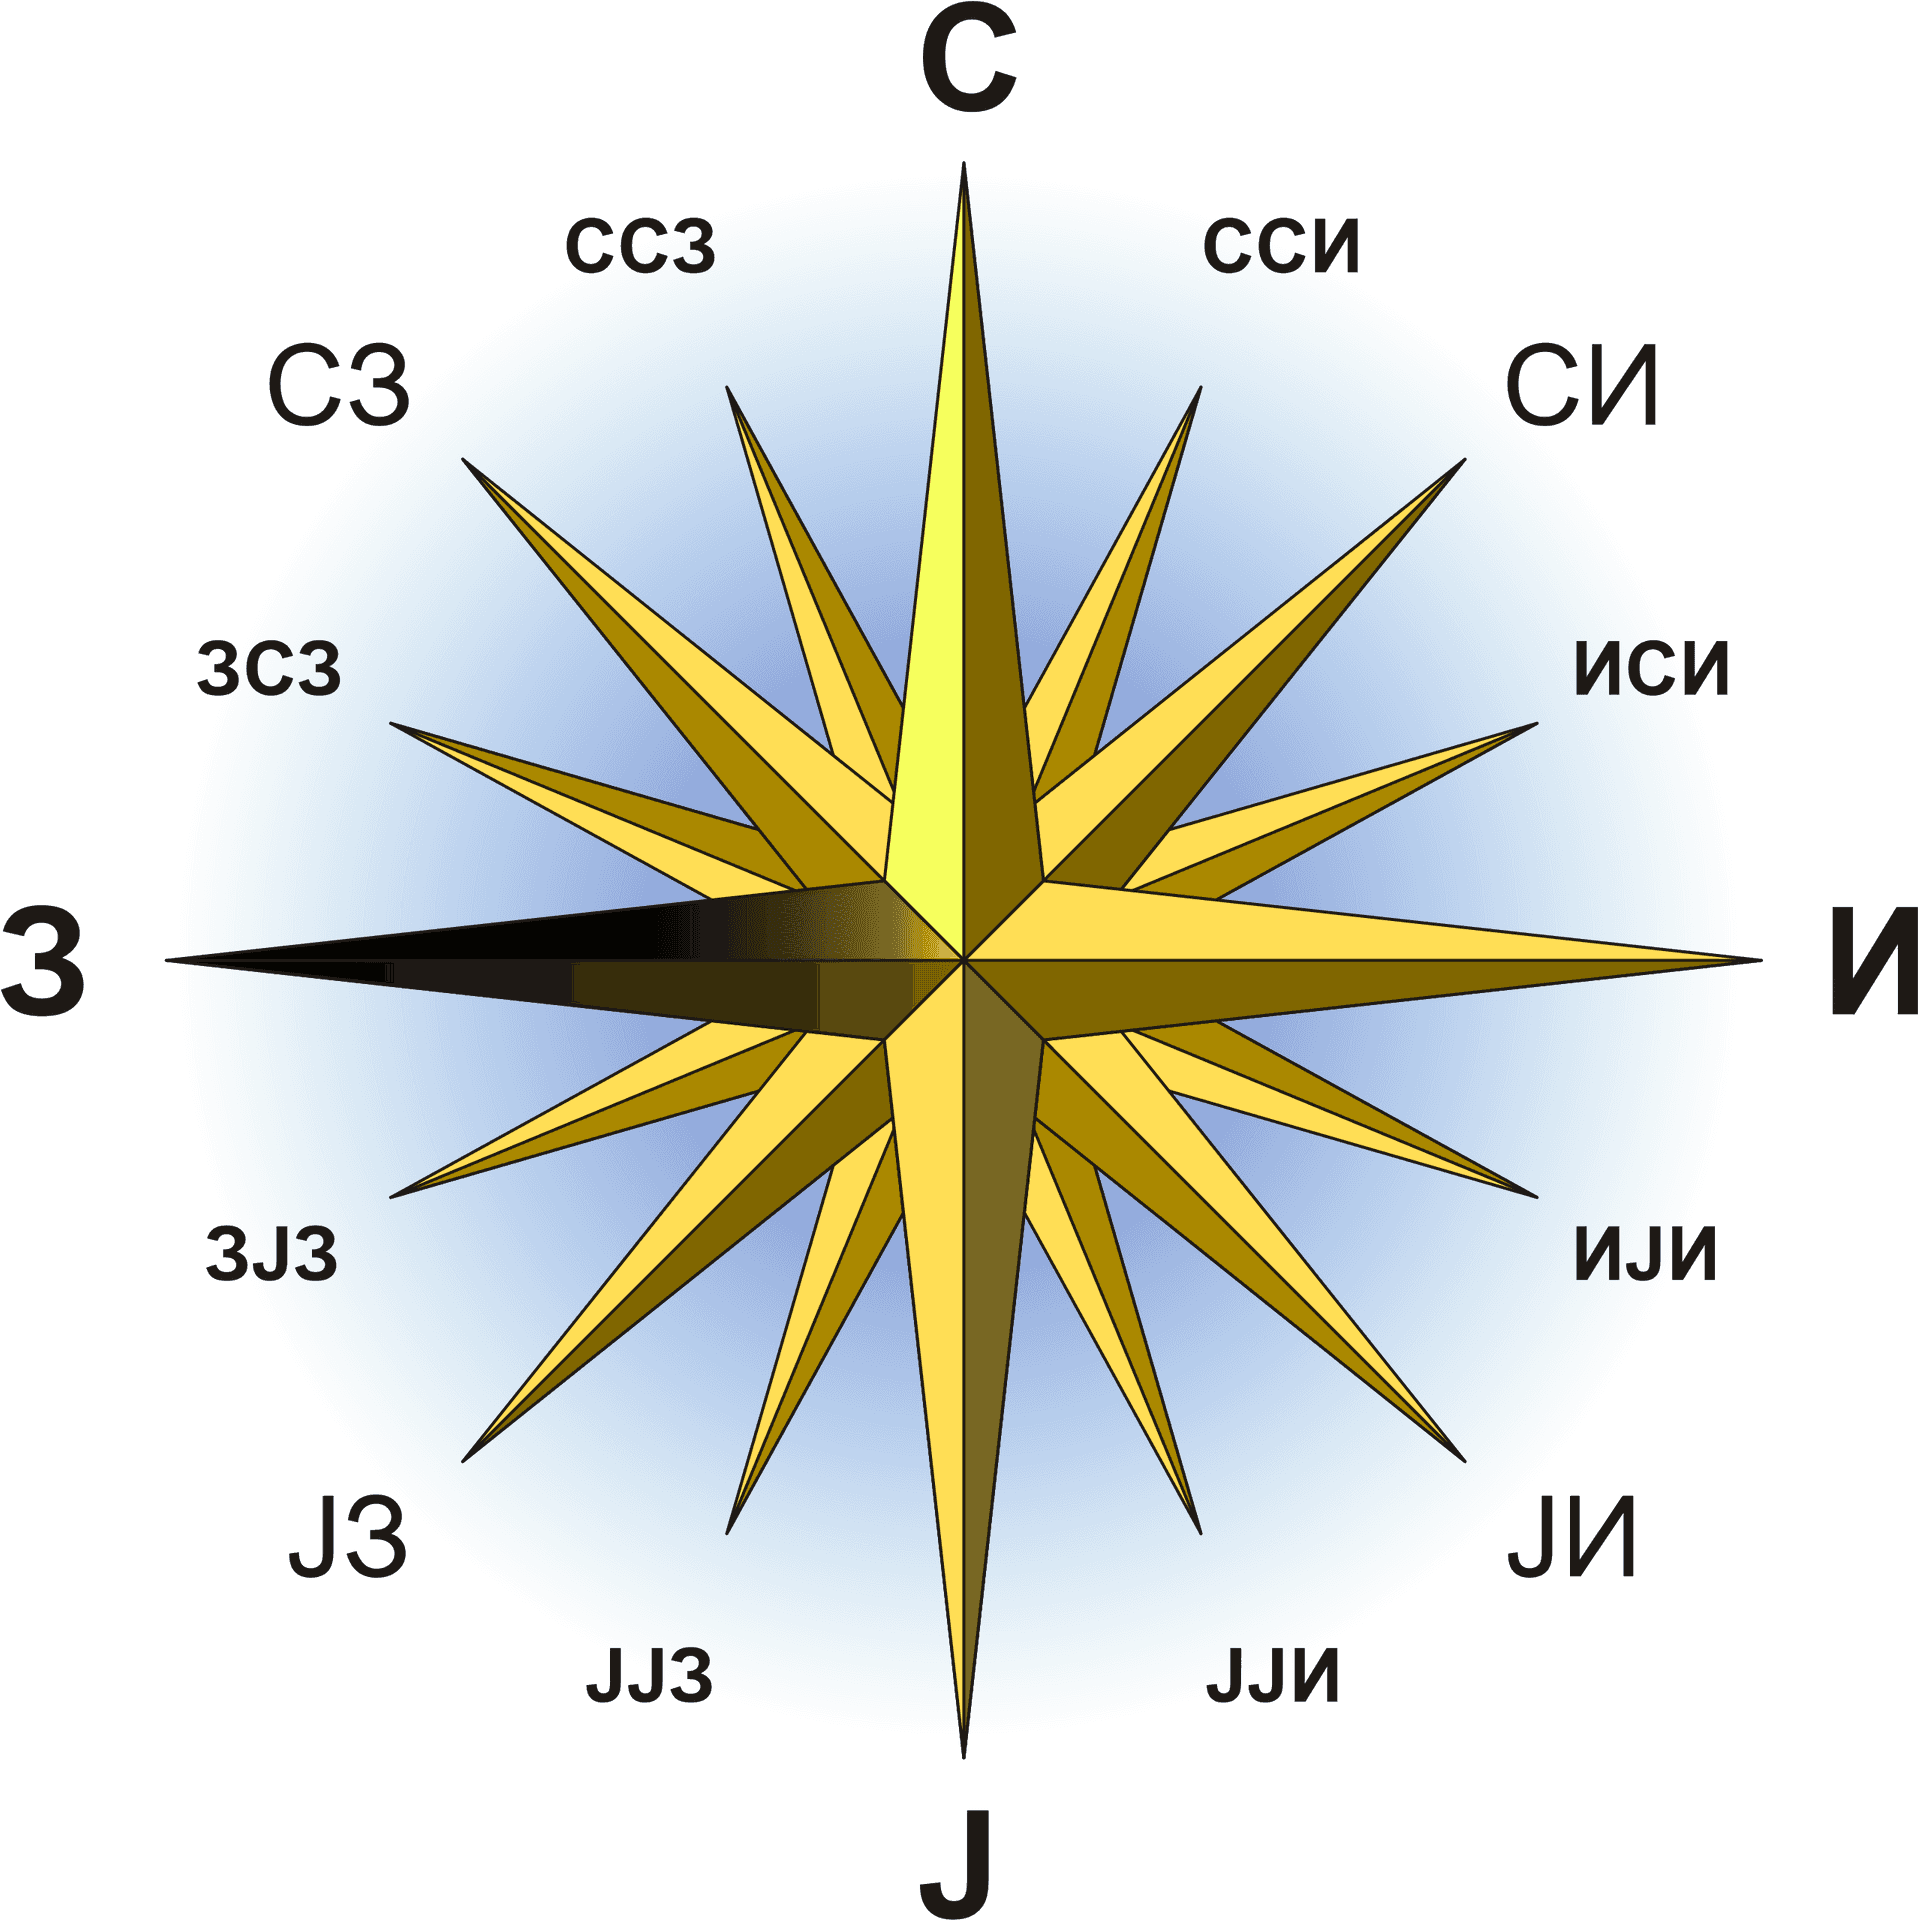 Compass Rose Cyrillic Cardinal Points PNG image